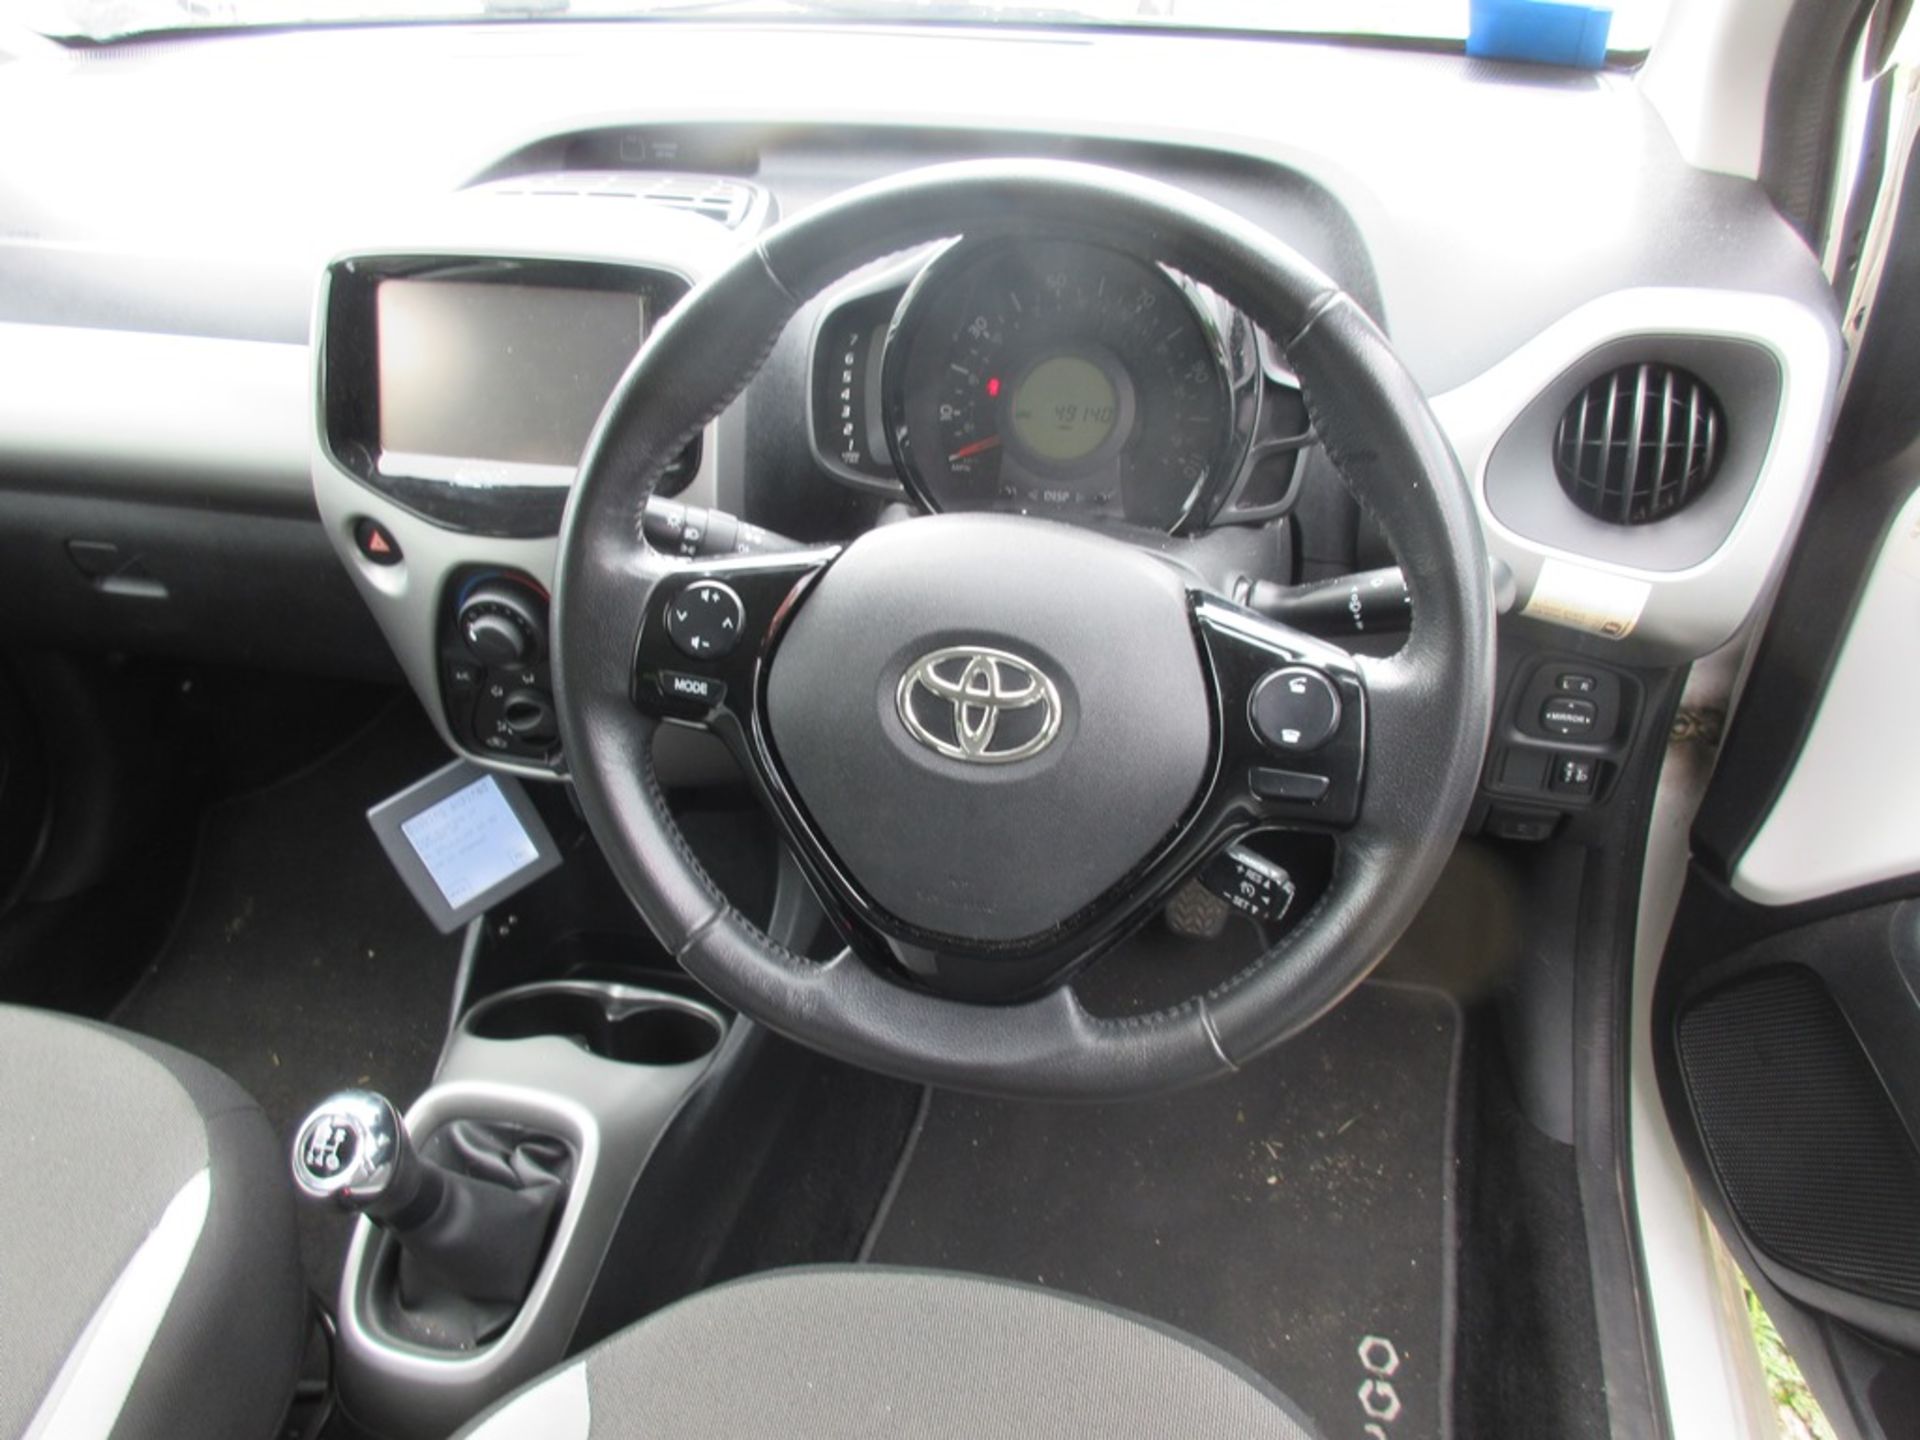 Toyota Aygo X-Play Vvt-I petrol hatchback, 67bhp Registration: WA66 VEK Recorded mileage: 49,140 - Image 13 of 14